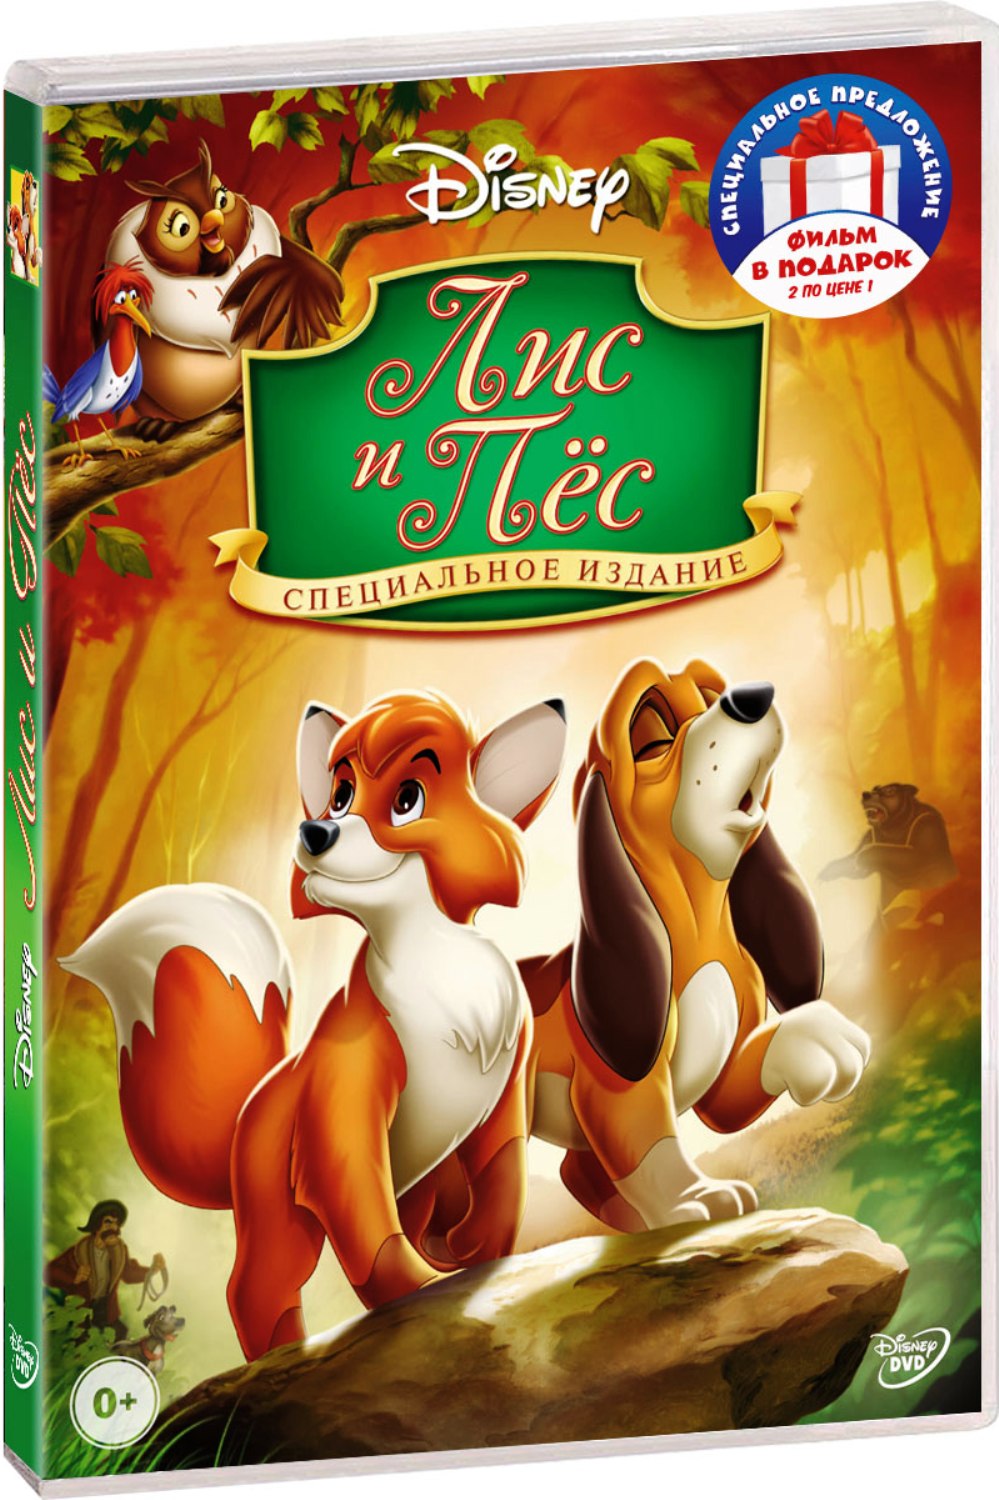 Лис и пёс / Книга джунглей (2 DVD) цена и фото